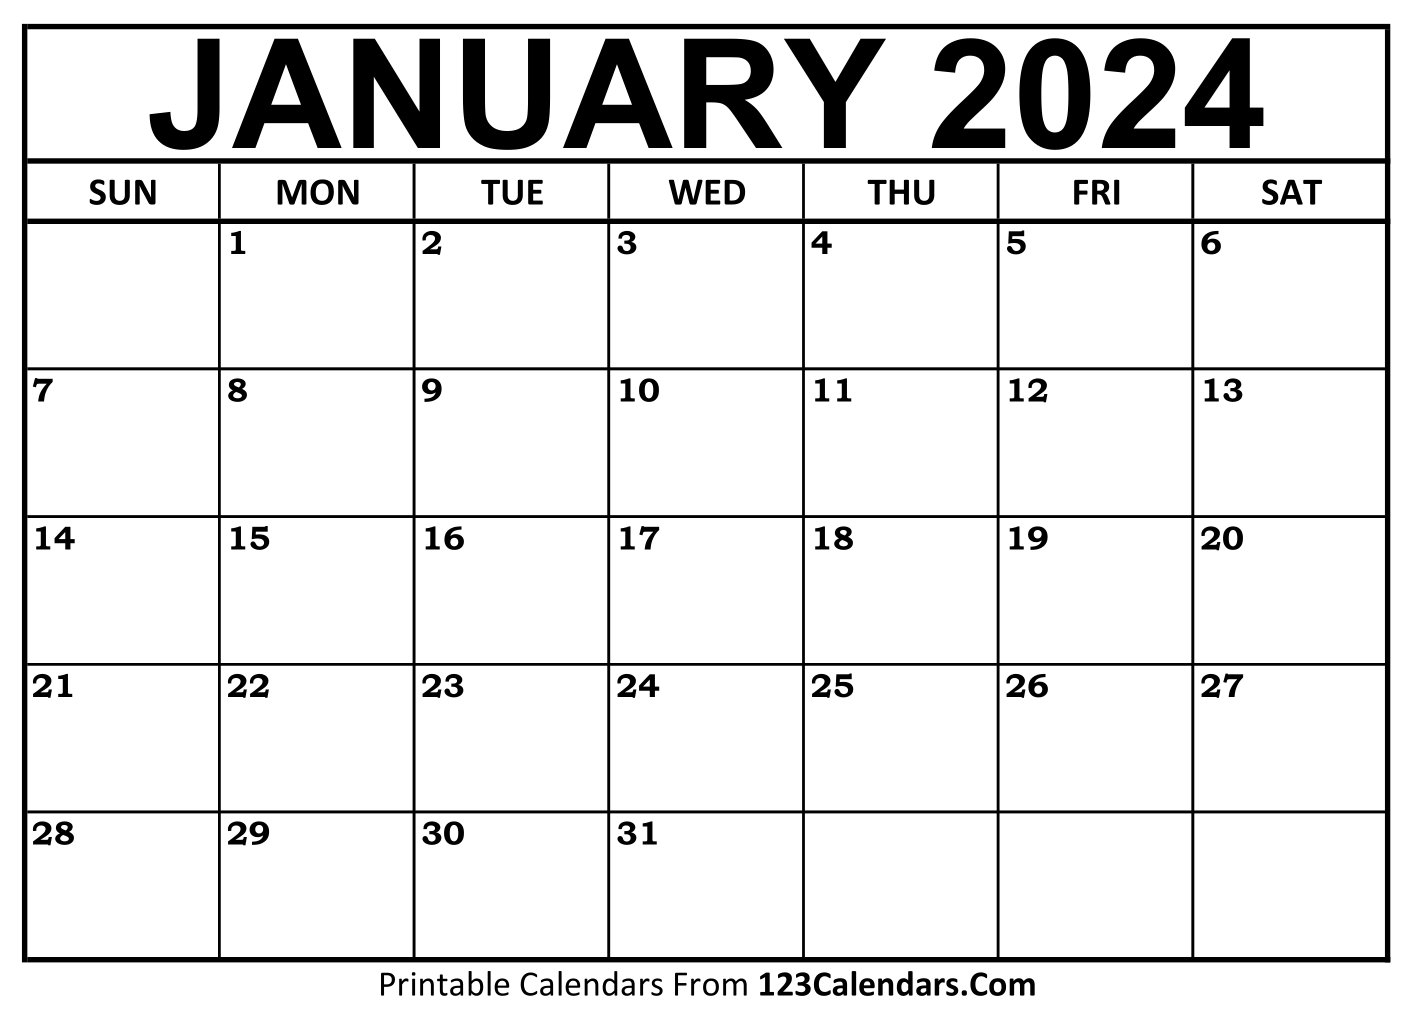 Printable January 2024 Calendar Templates - 123Calendars for Printable Jan 2024 Calendar